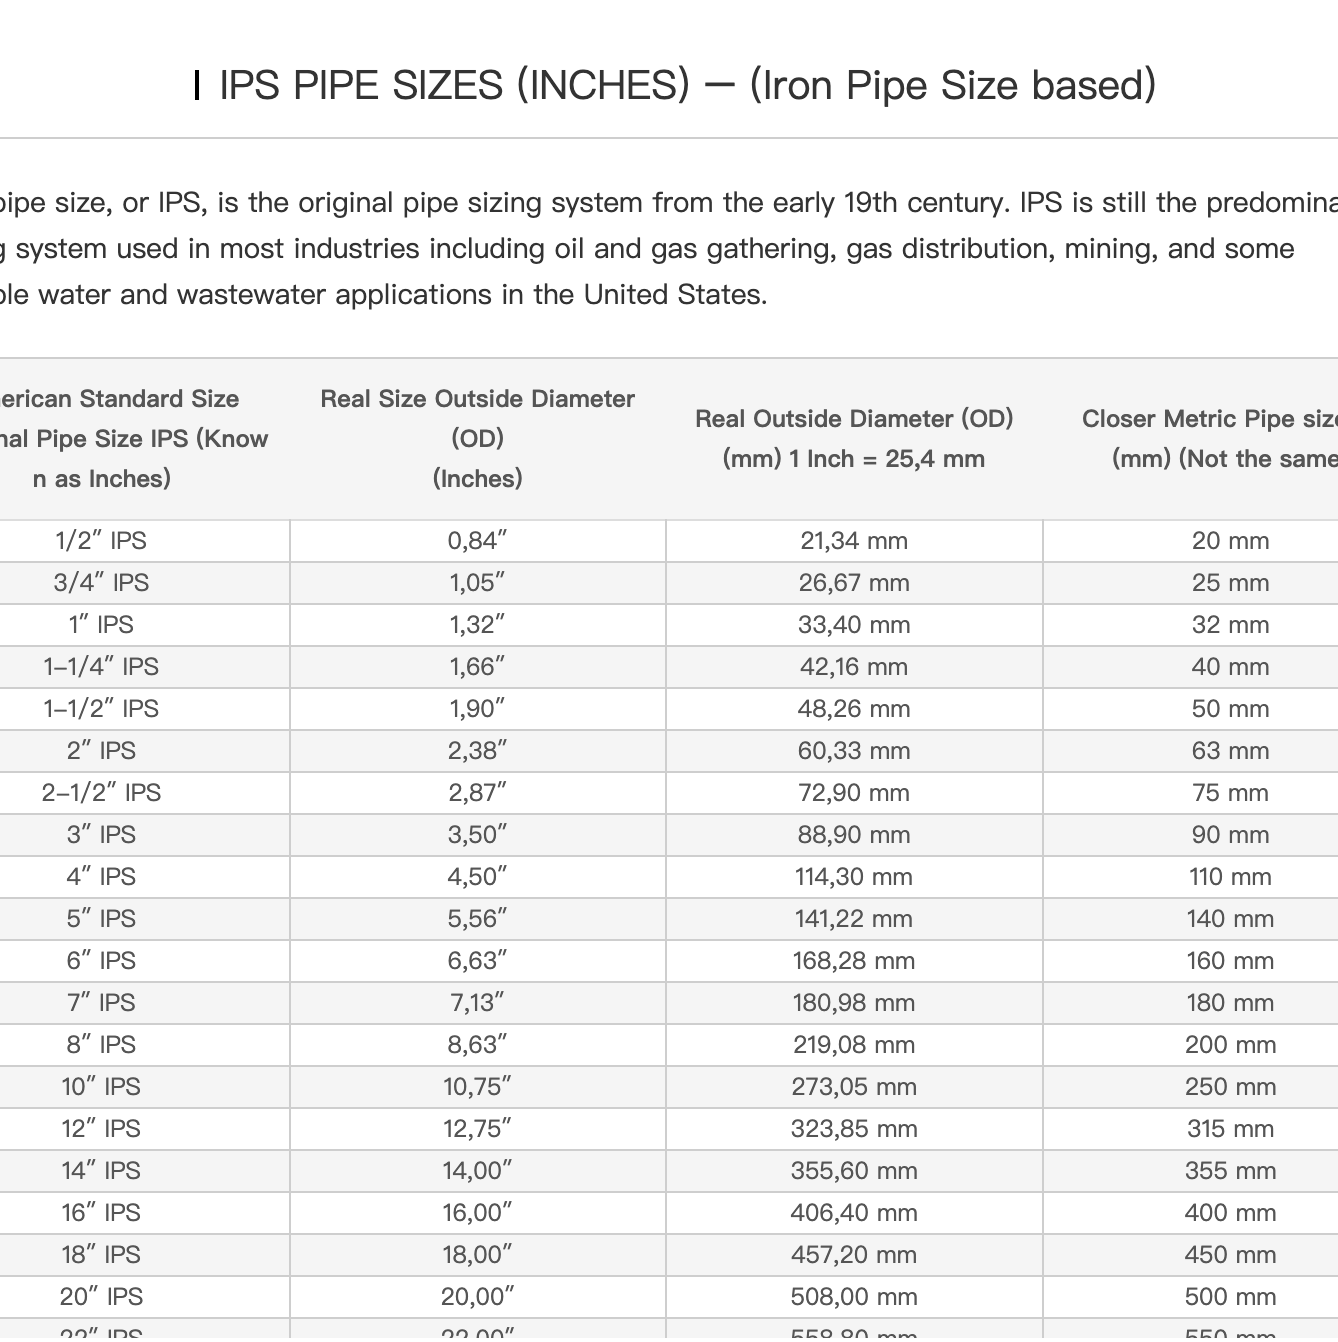 Tamaños de tubería termoplástica HDPE IPS DIPS mm Tabla de conversión